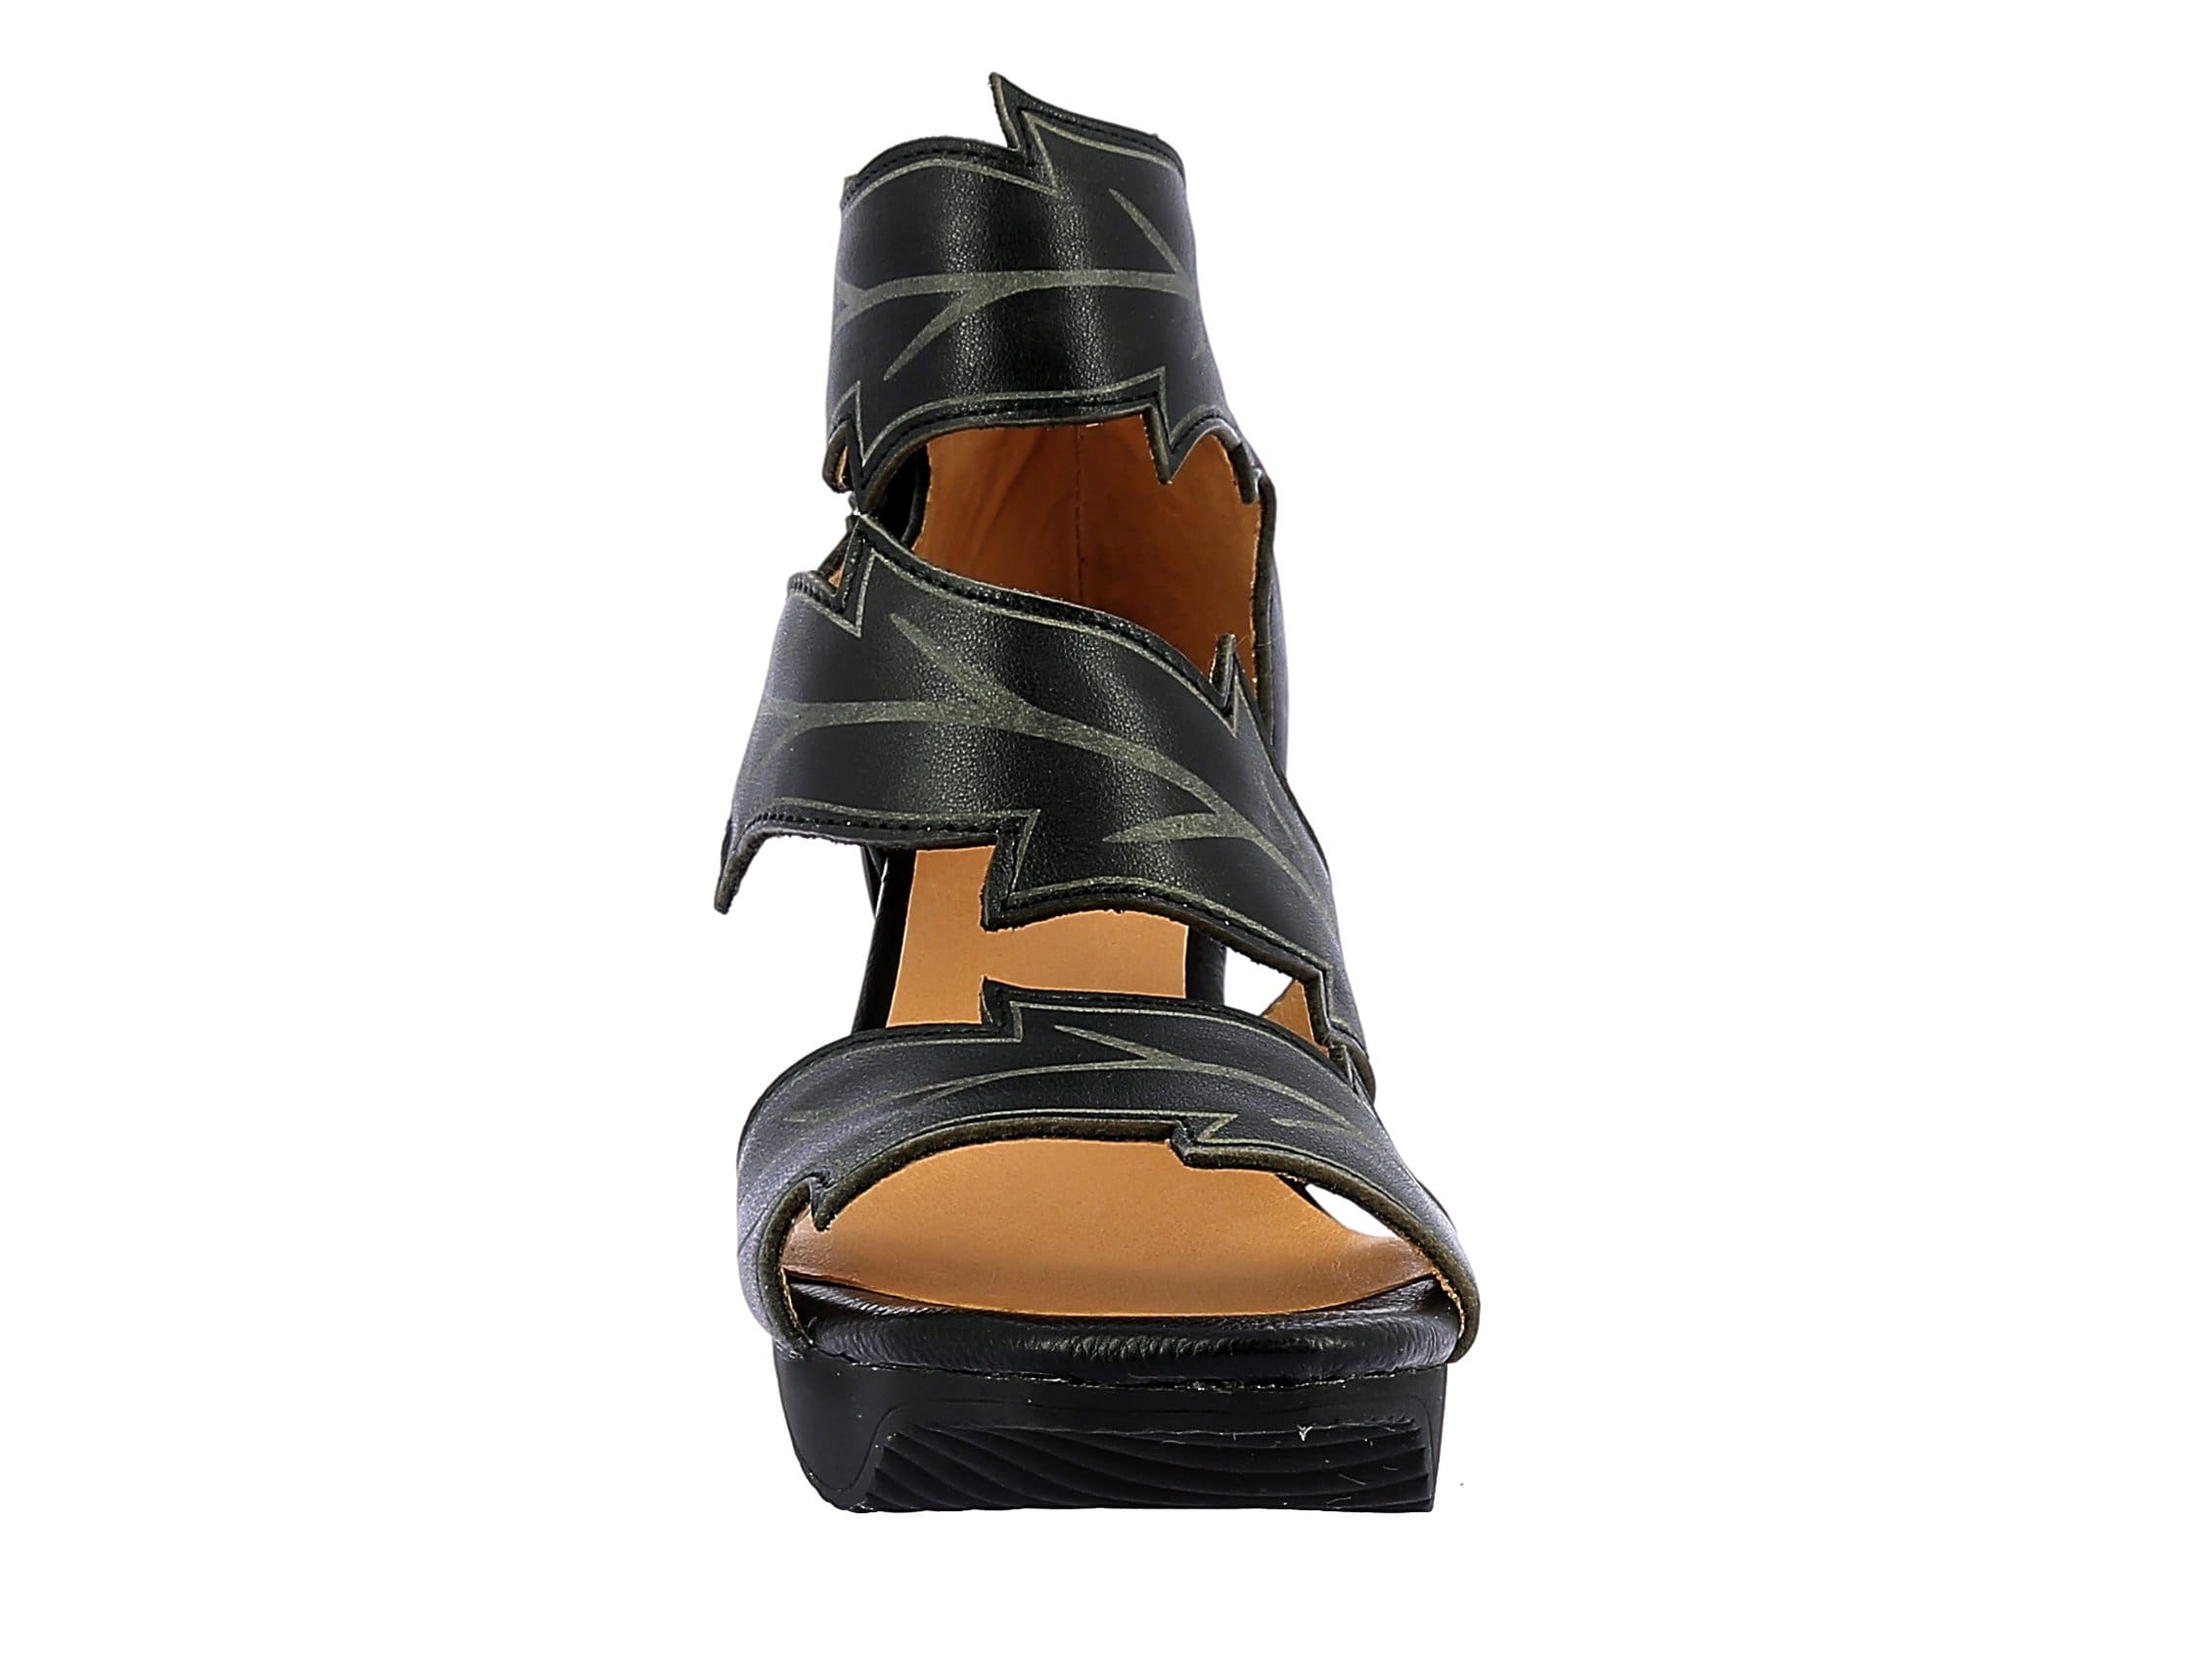 Shoe ARCMANCEO185 - Sandal